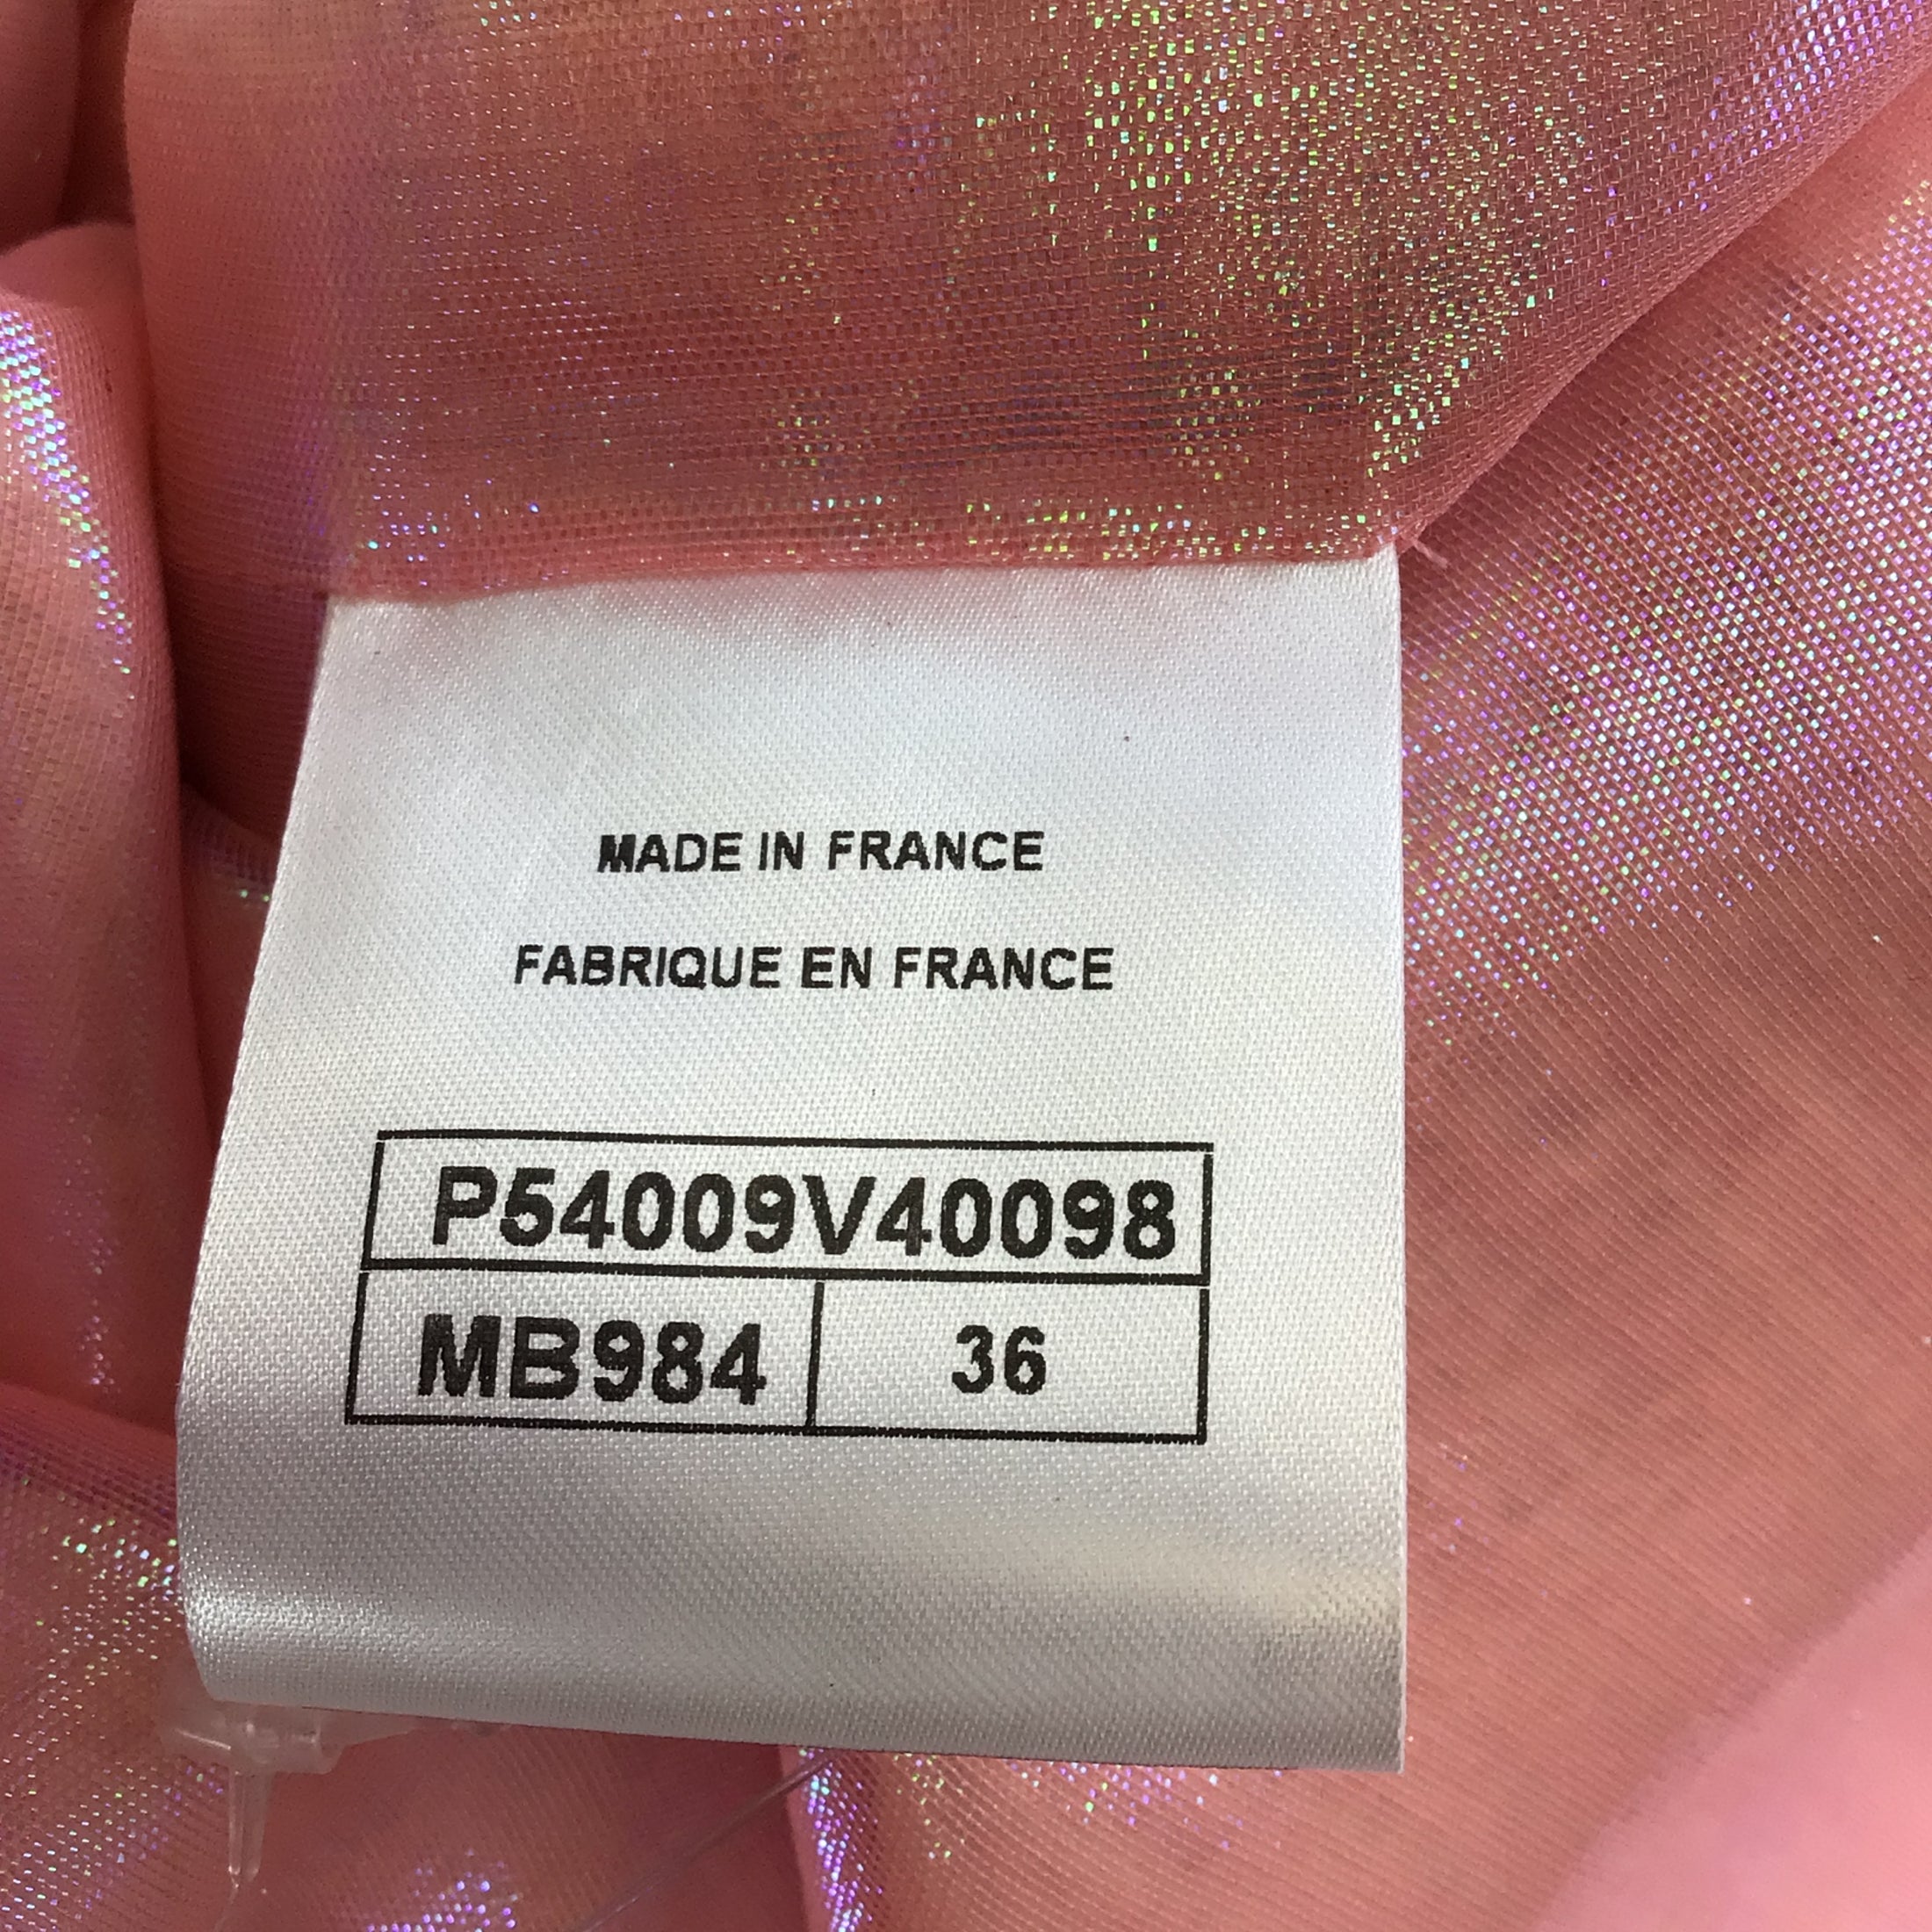 Chanel Light Pink / Ecru 2016 Three-Button Fantasy Tweed Coat